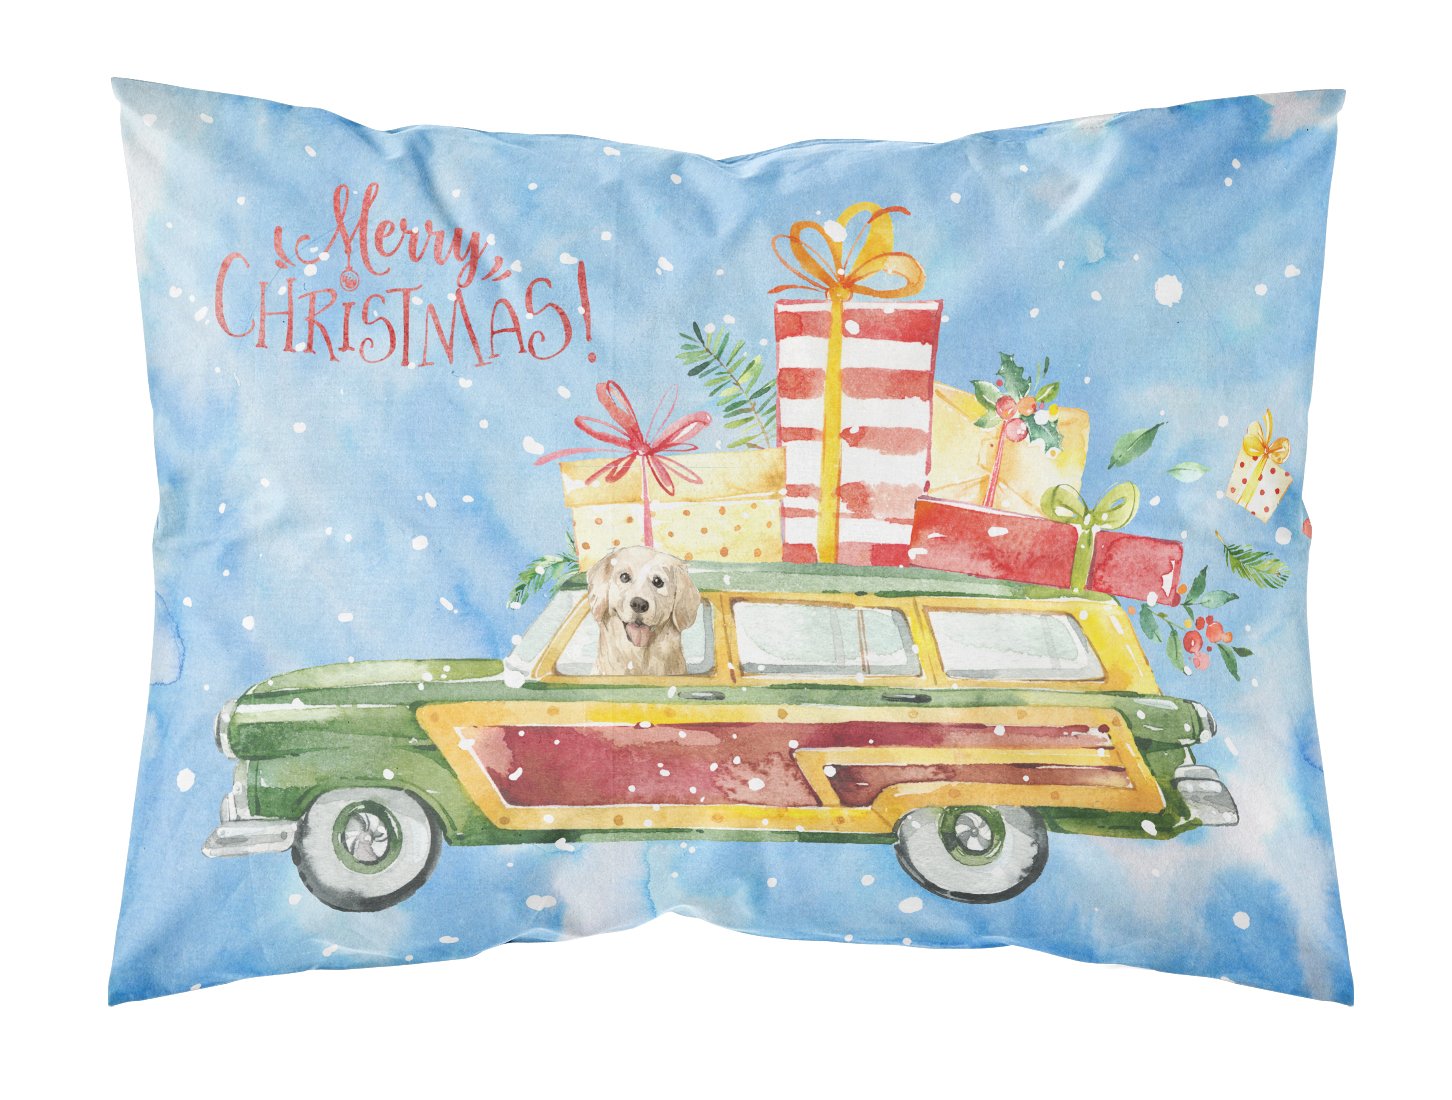 Merry Christmas Golden Retriever Fabric Standard Pillowcase CK2407PILLOWCASE by Caroline's Treasures